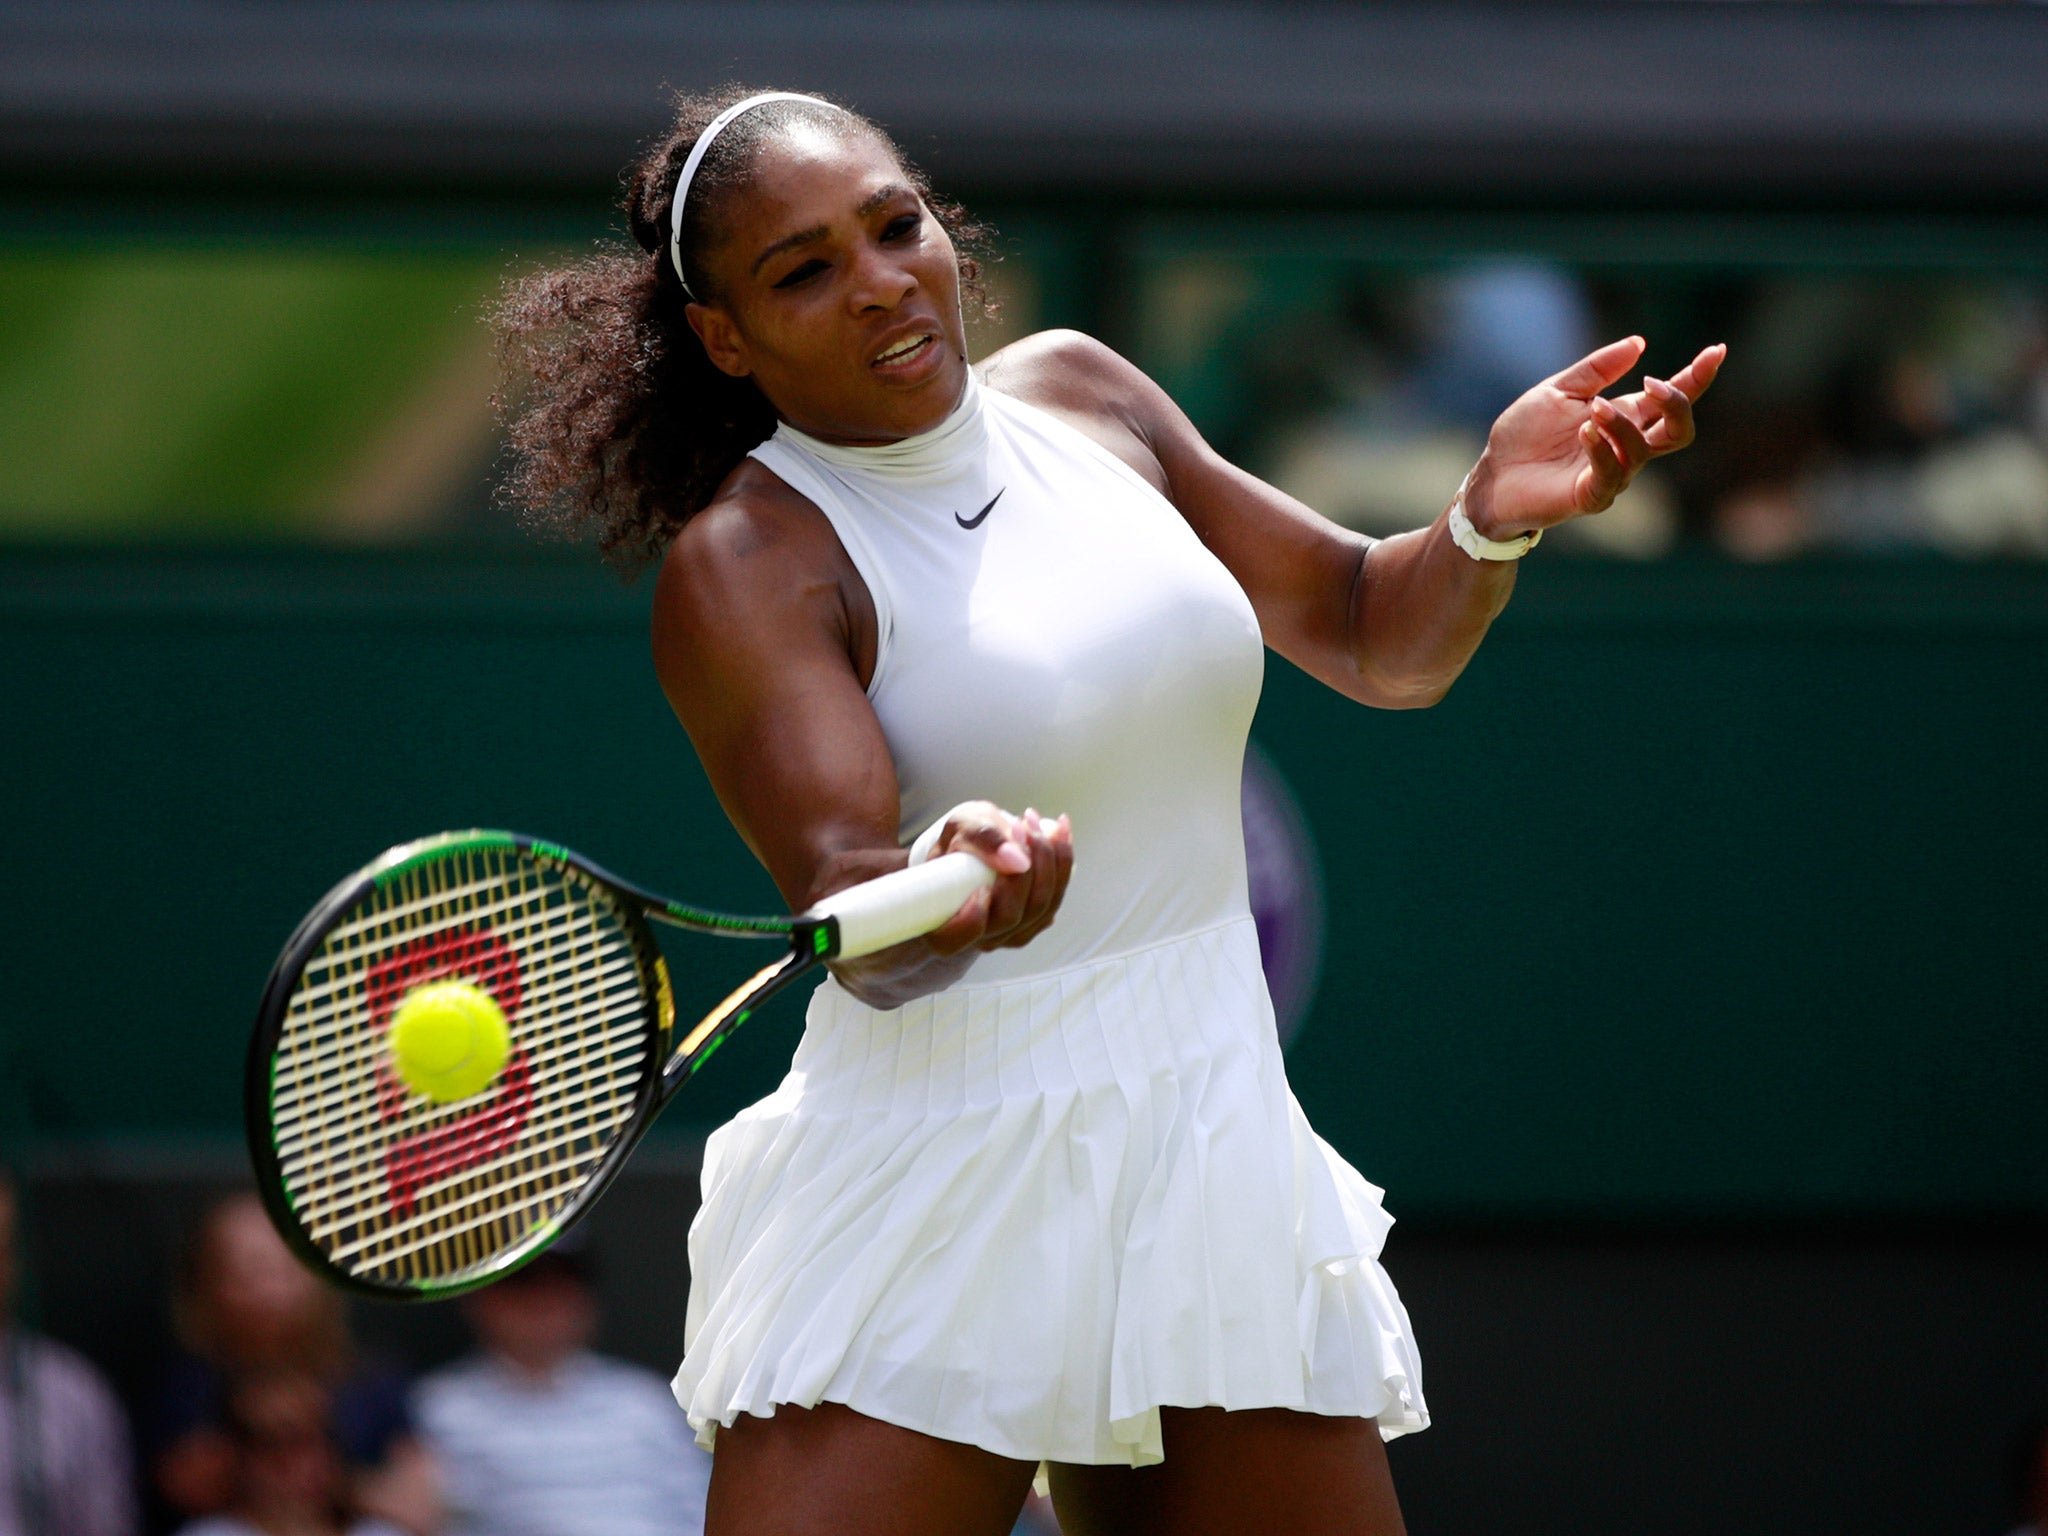 Serena Williams beat Annika Beck 6-3, 6-0